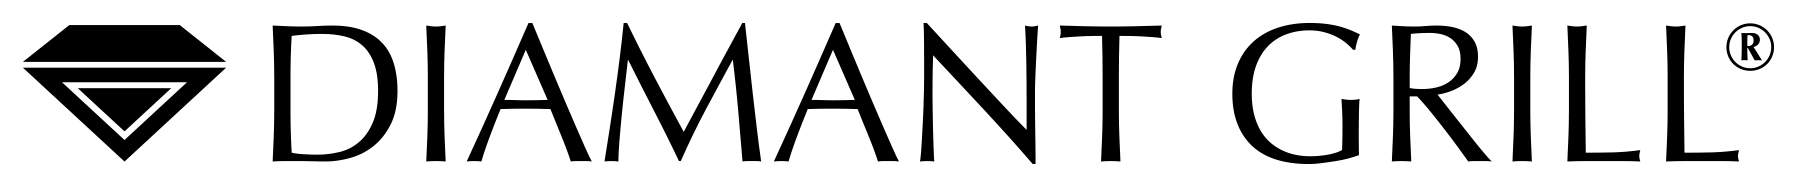 diamant-grill-logo-black-Kopie